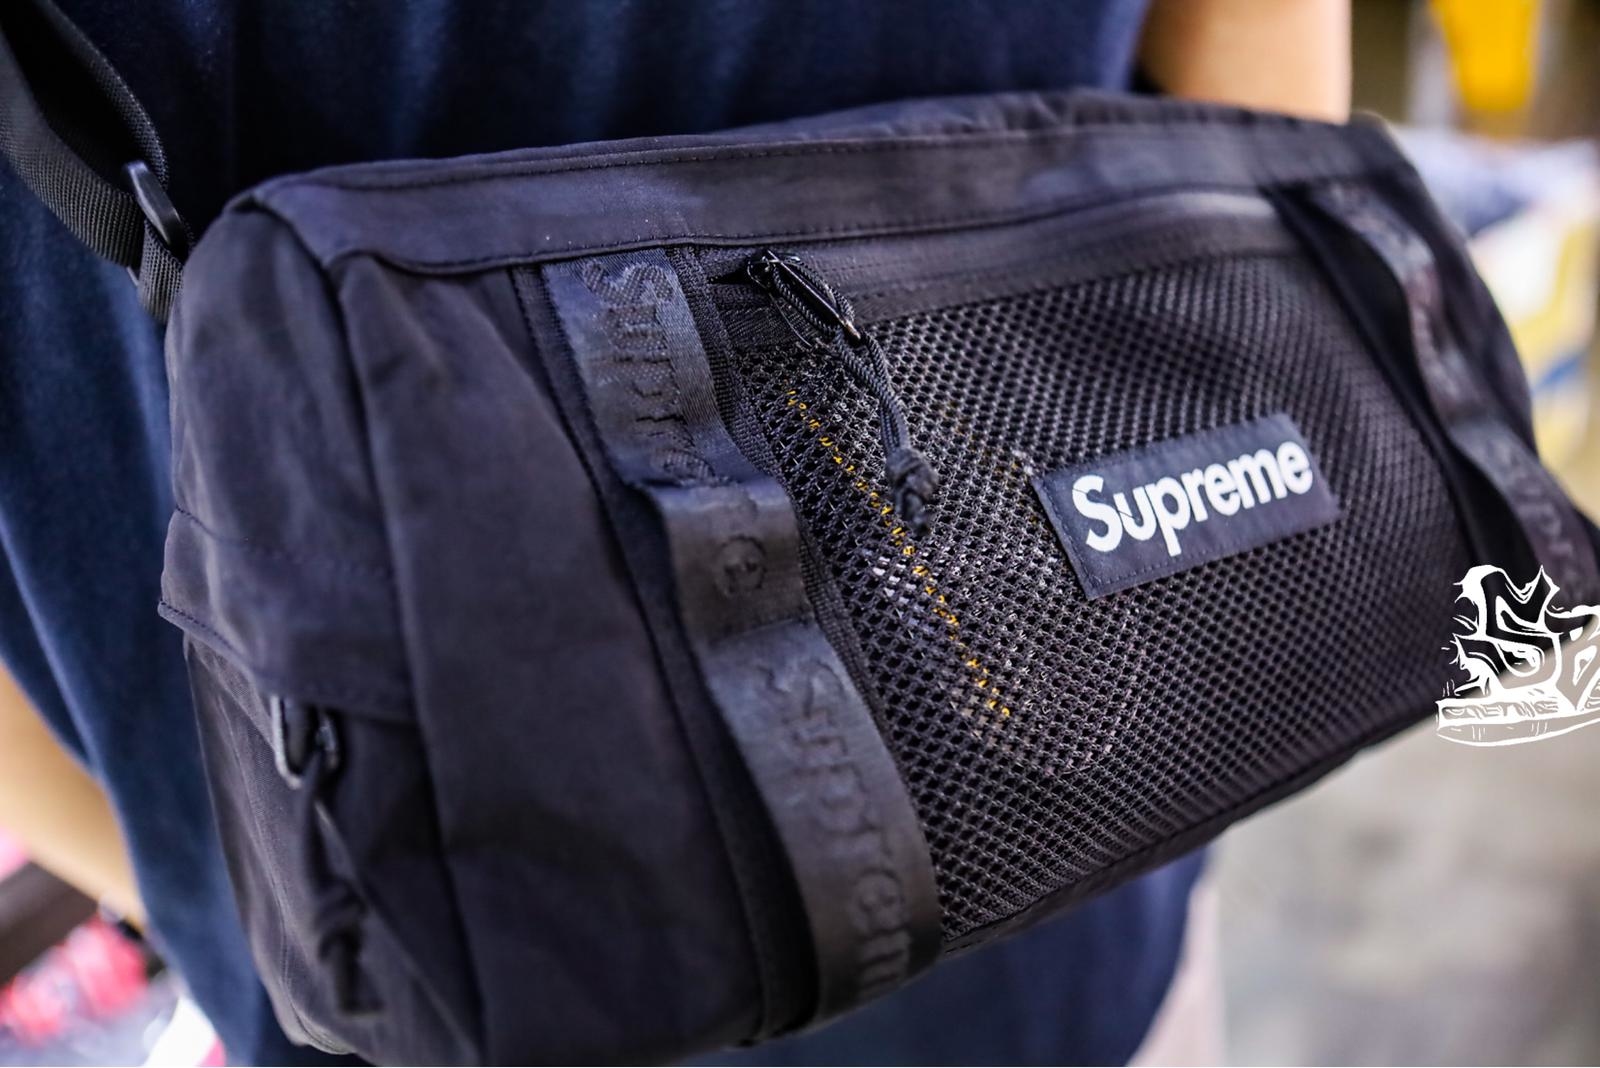 mini supreme bag